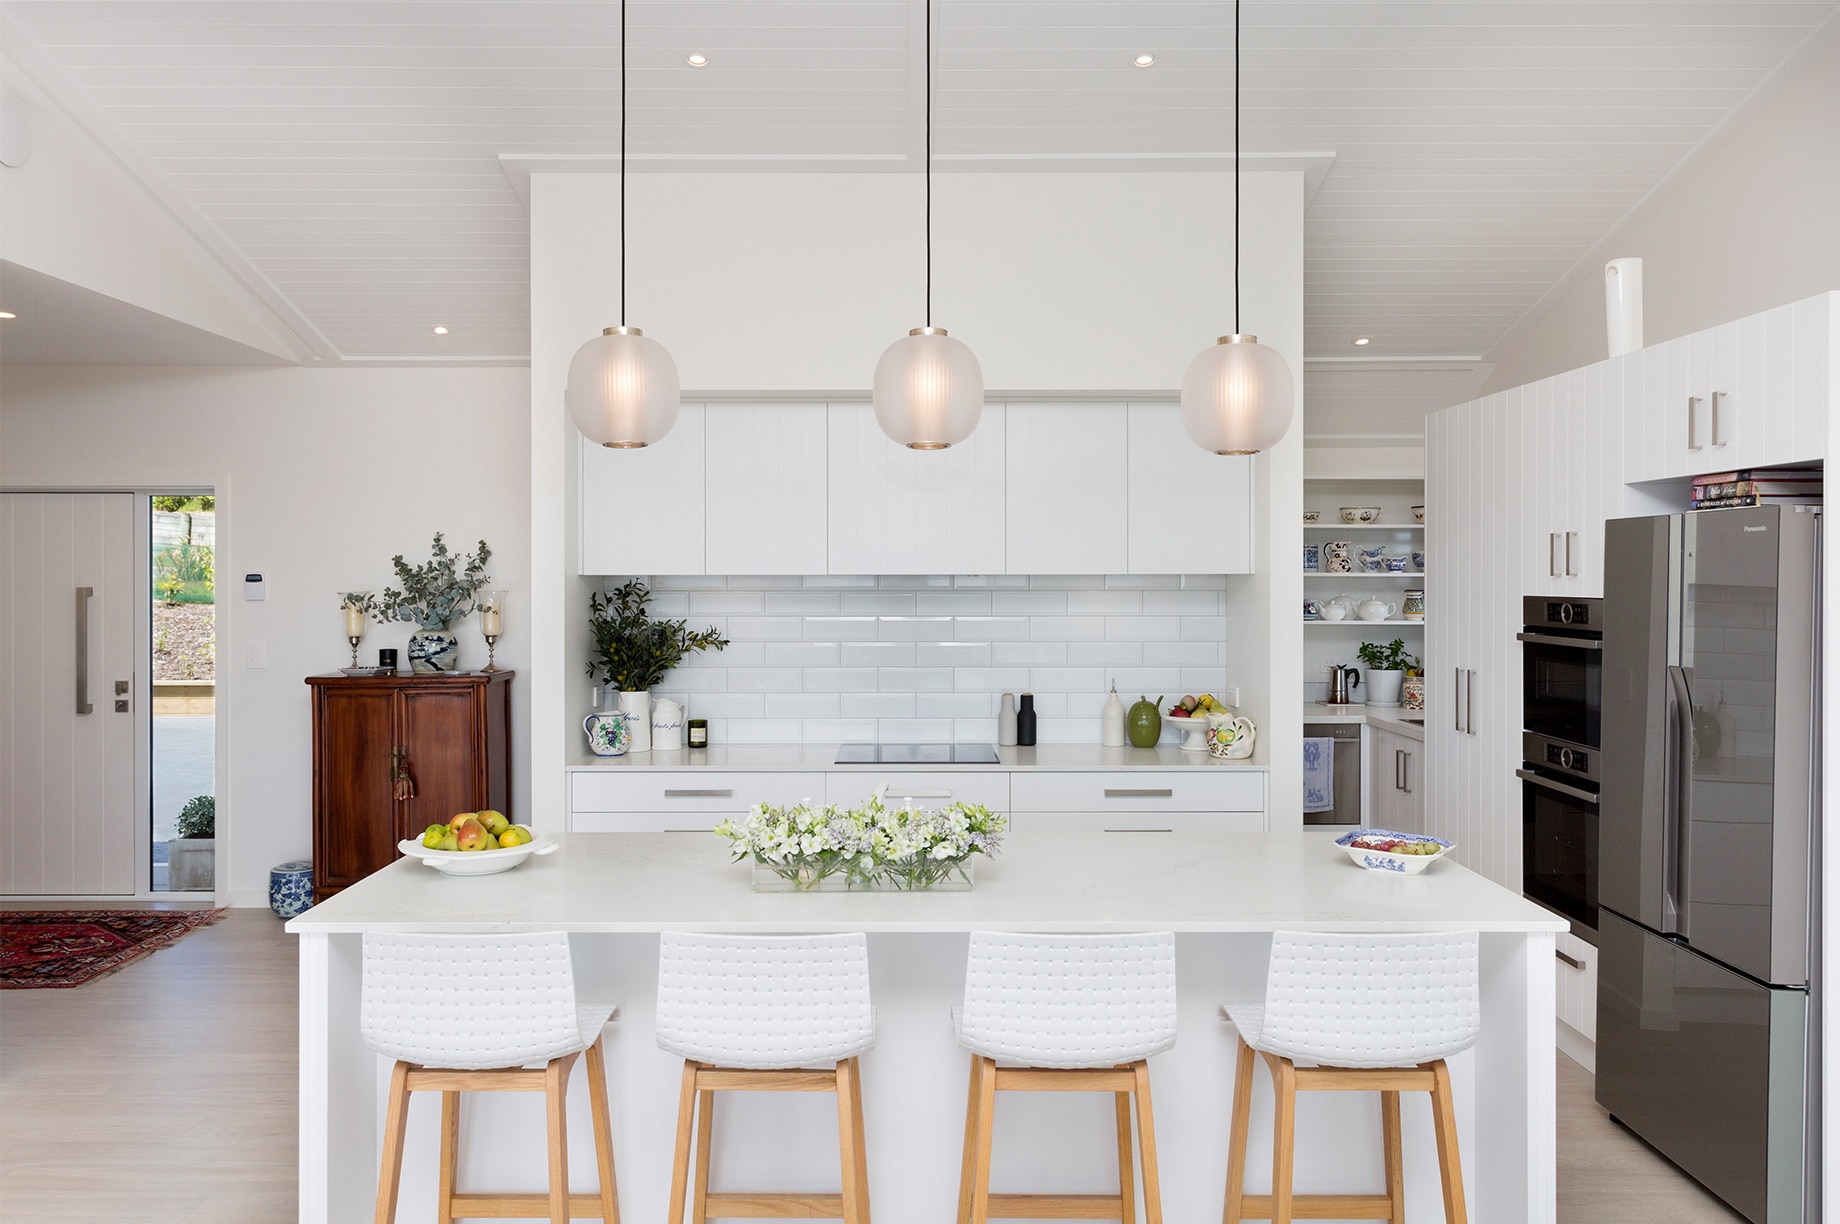 White kitchen interior with hanging decorative lights